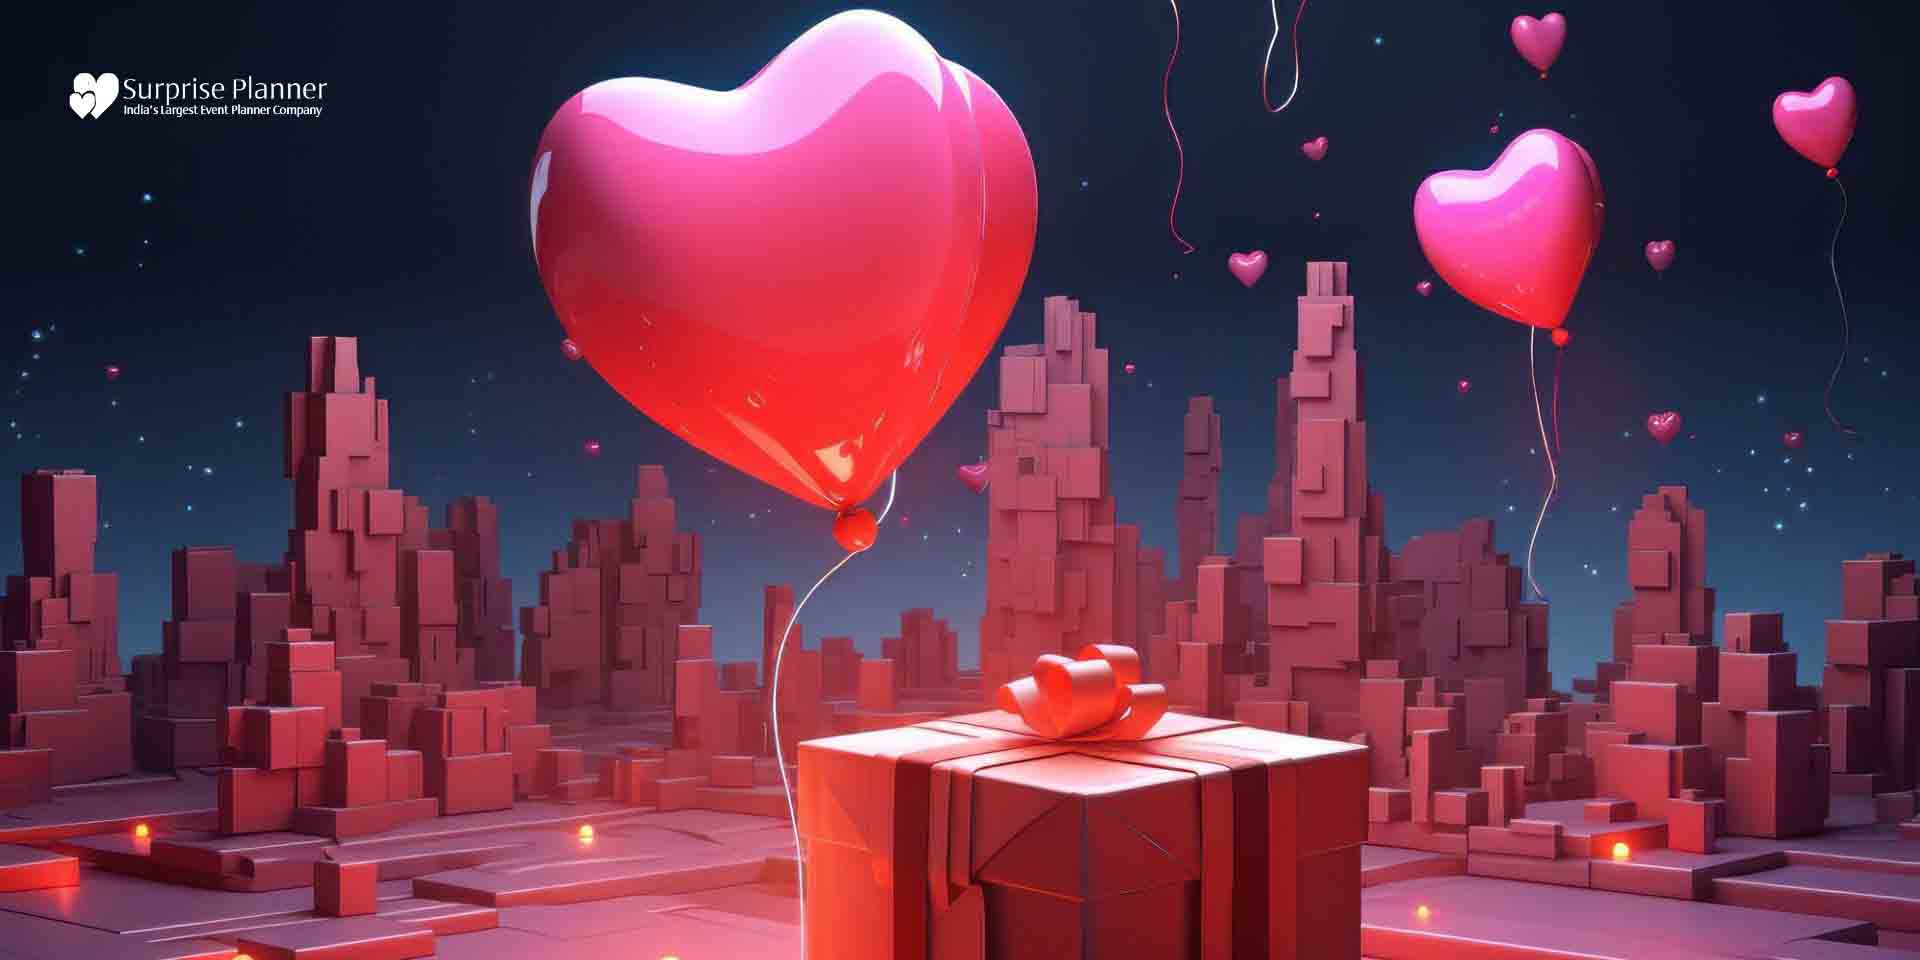 Creative Valentine’s Day ideas for him & her